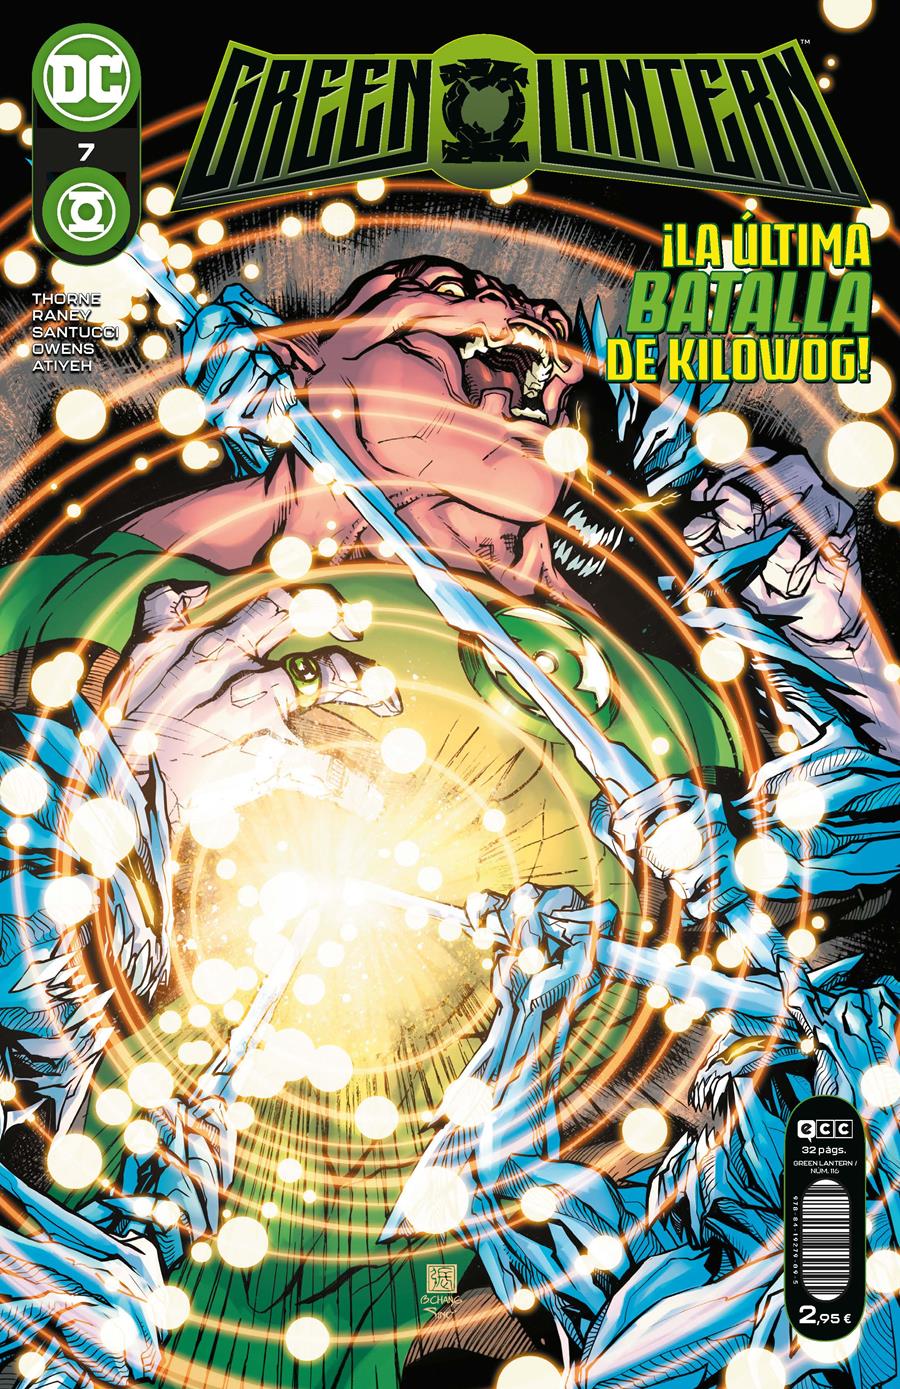 Green Lantern núm. 7/ 116 | N0522-ECC11 | Andy Owens / Geoffrey Thorne / Marco Santucci / Tom Raney | Terra de Còmic - Tu tienda de cómics online especializada en cómics, manga y merchandising